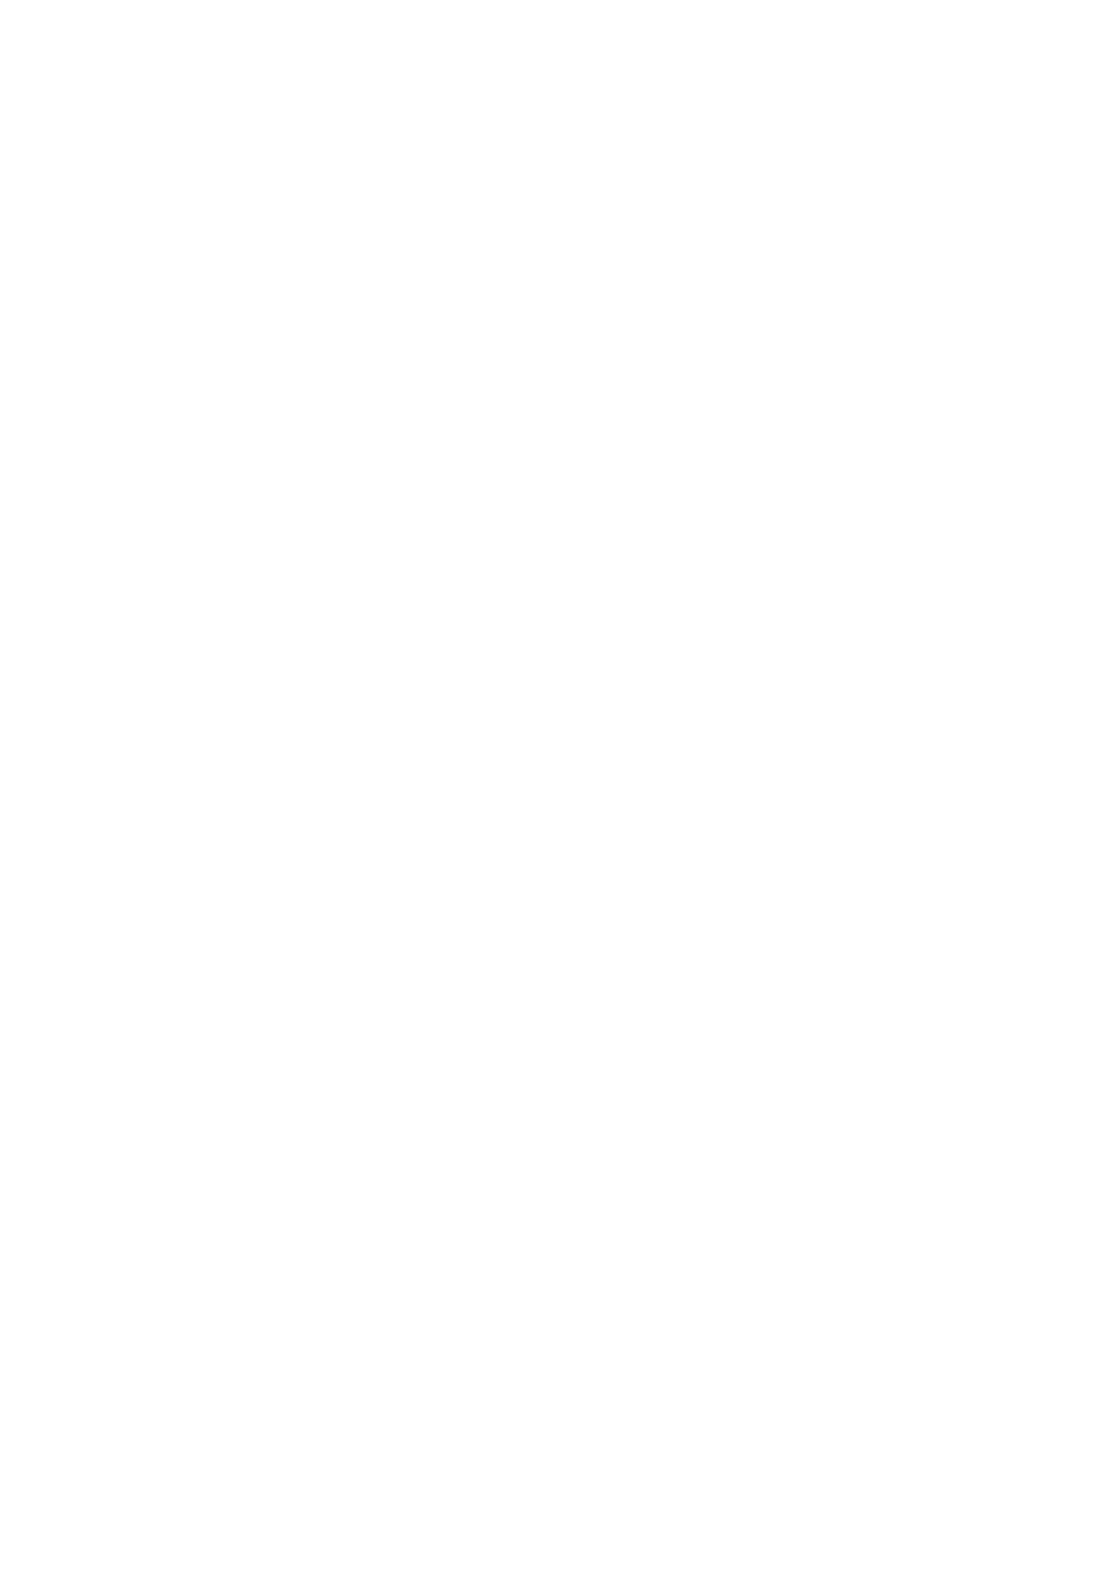 Singapore Land logo for dark backgrounds (transparent PNG)